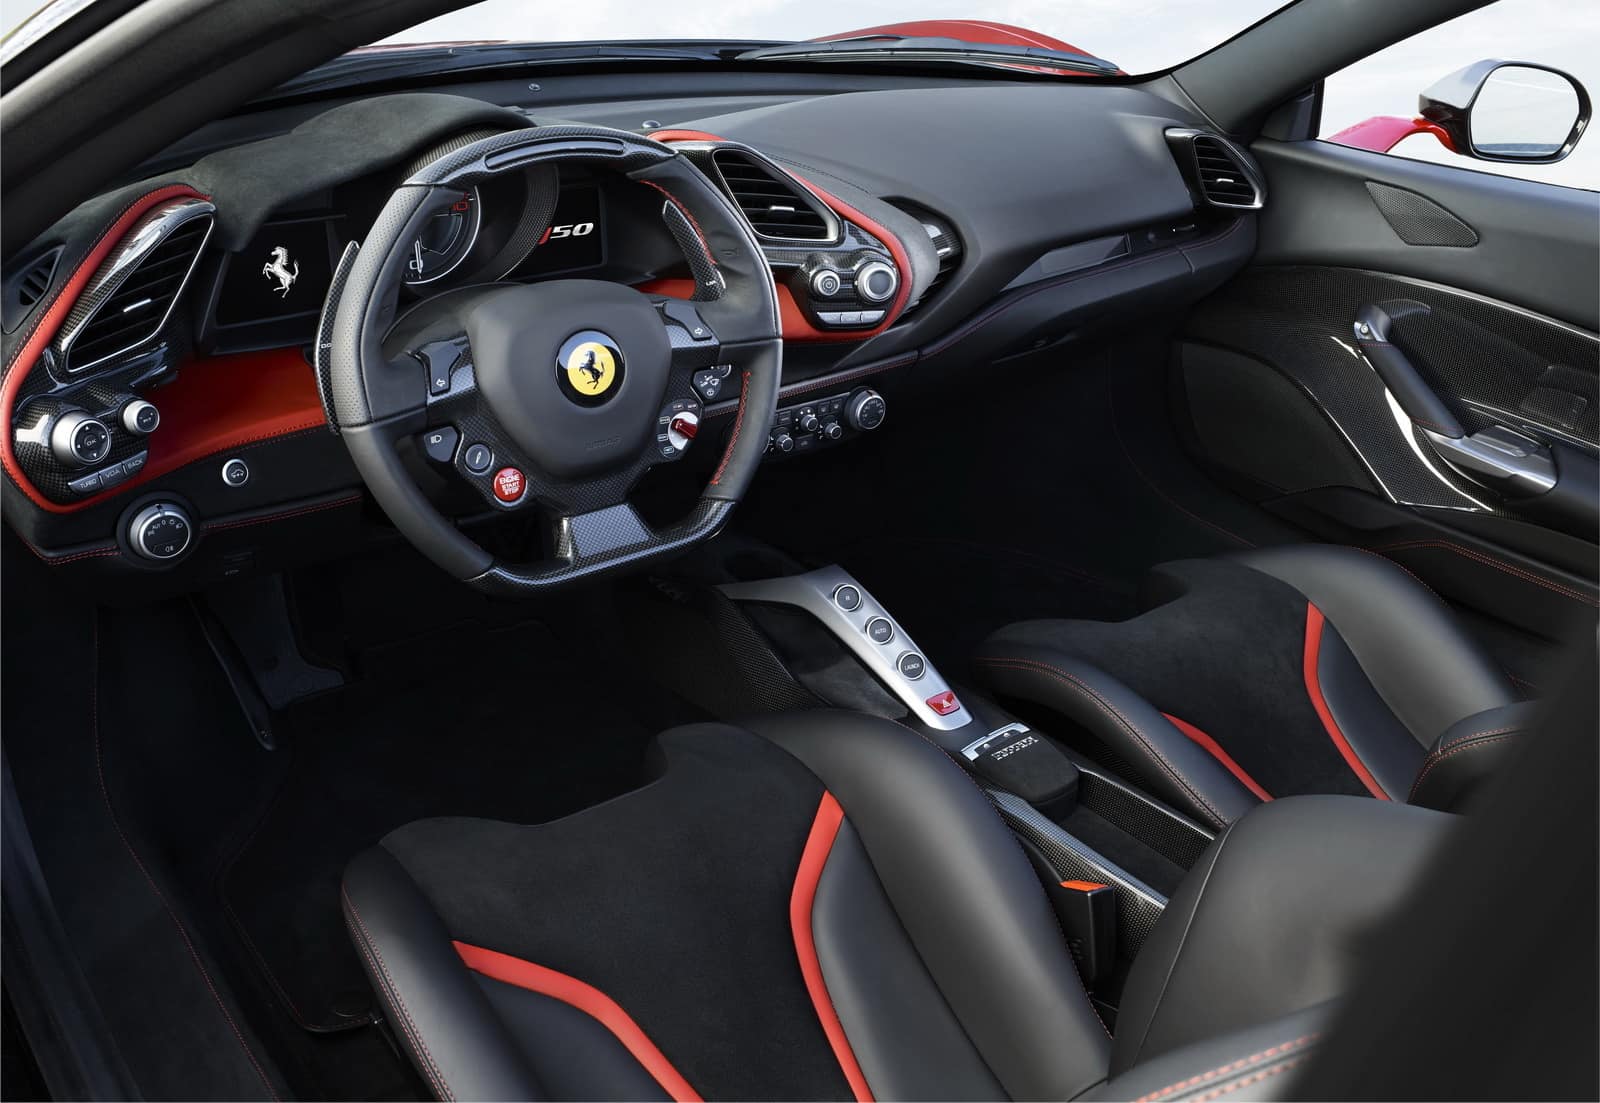 Officiala Ferrari J50 Limited Edition 4